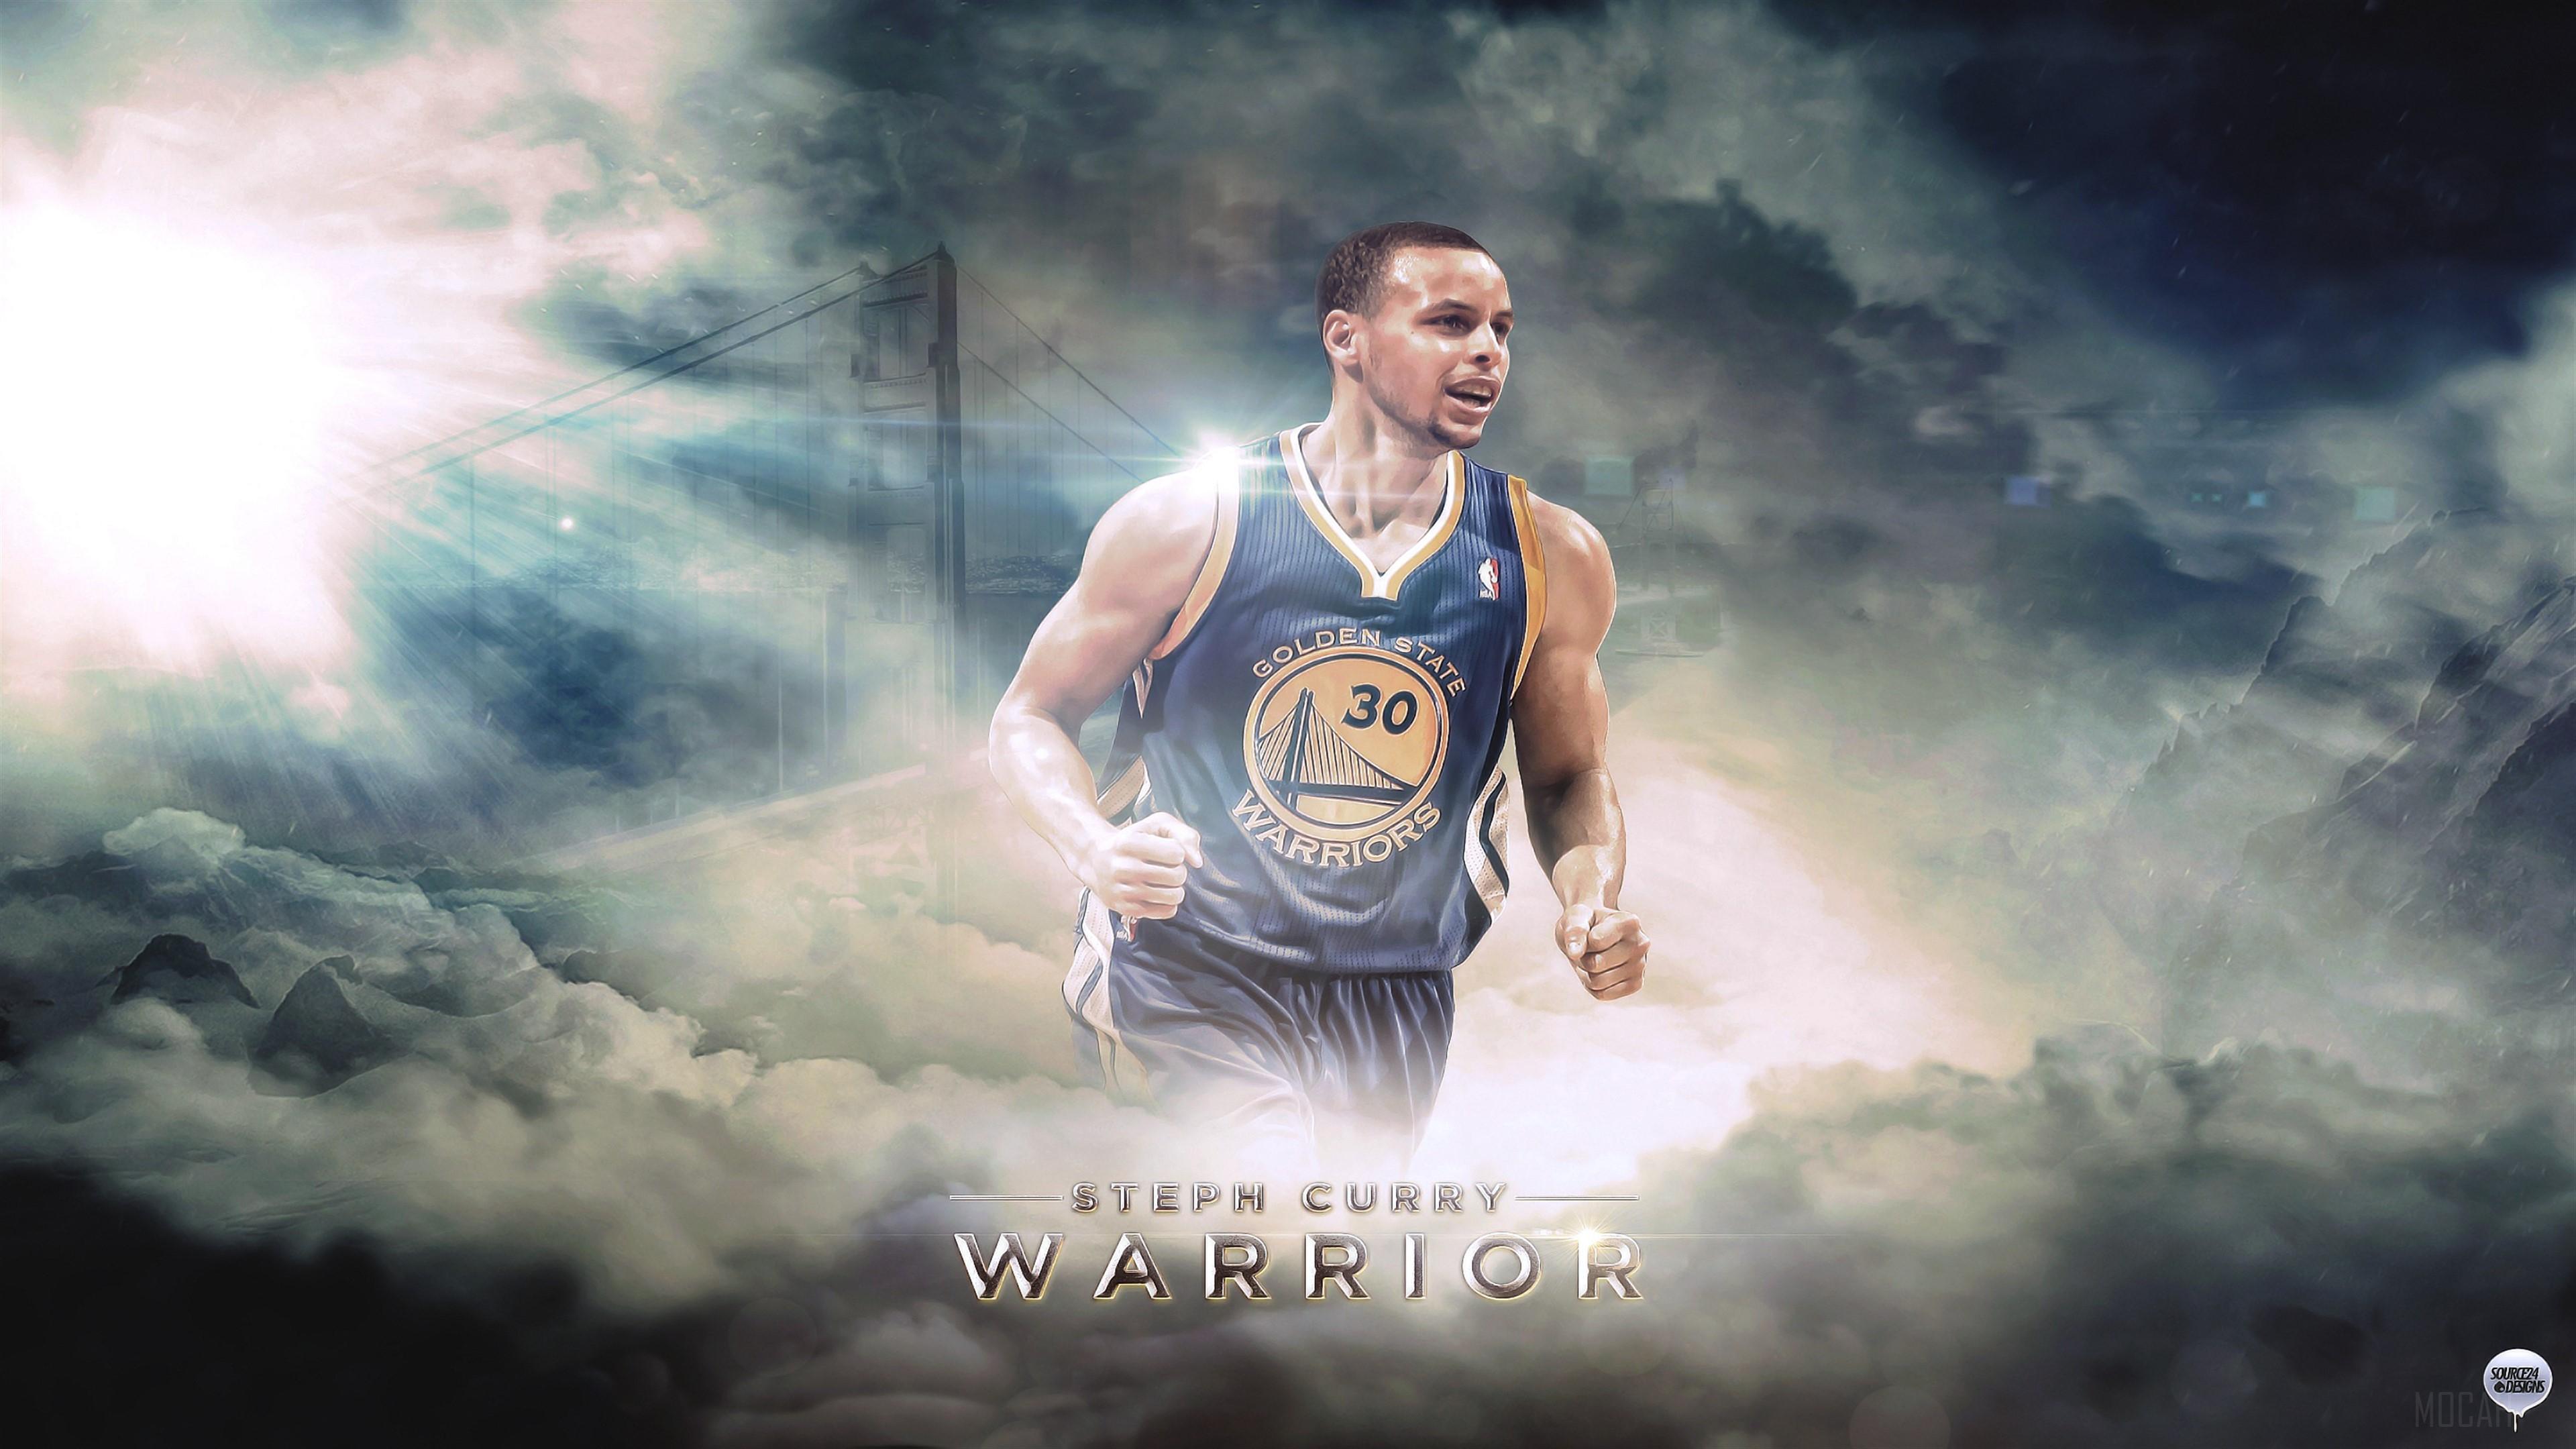 HD wallpaper, Stephen Curry Basketball Player 4K